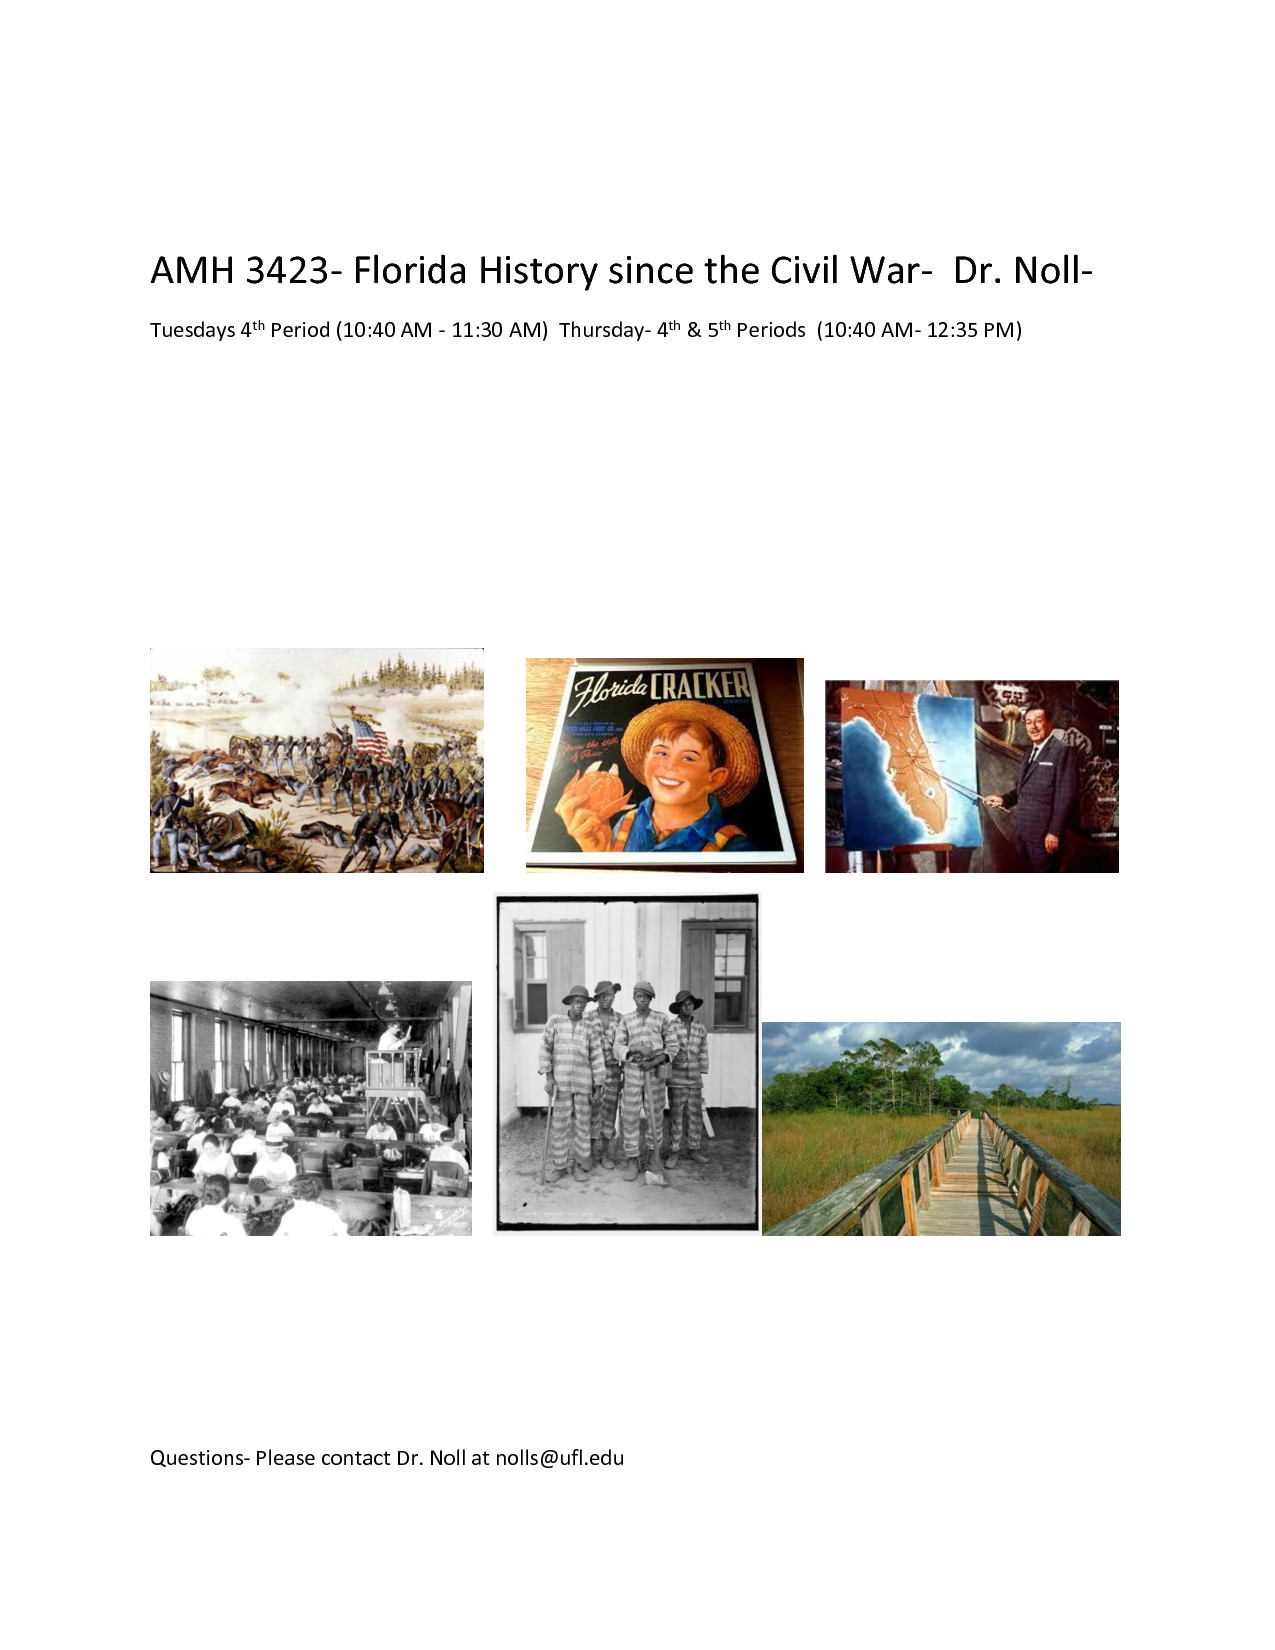 Florida history class flyer